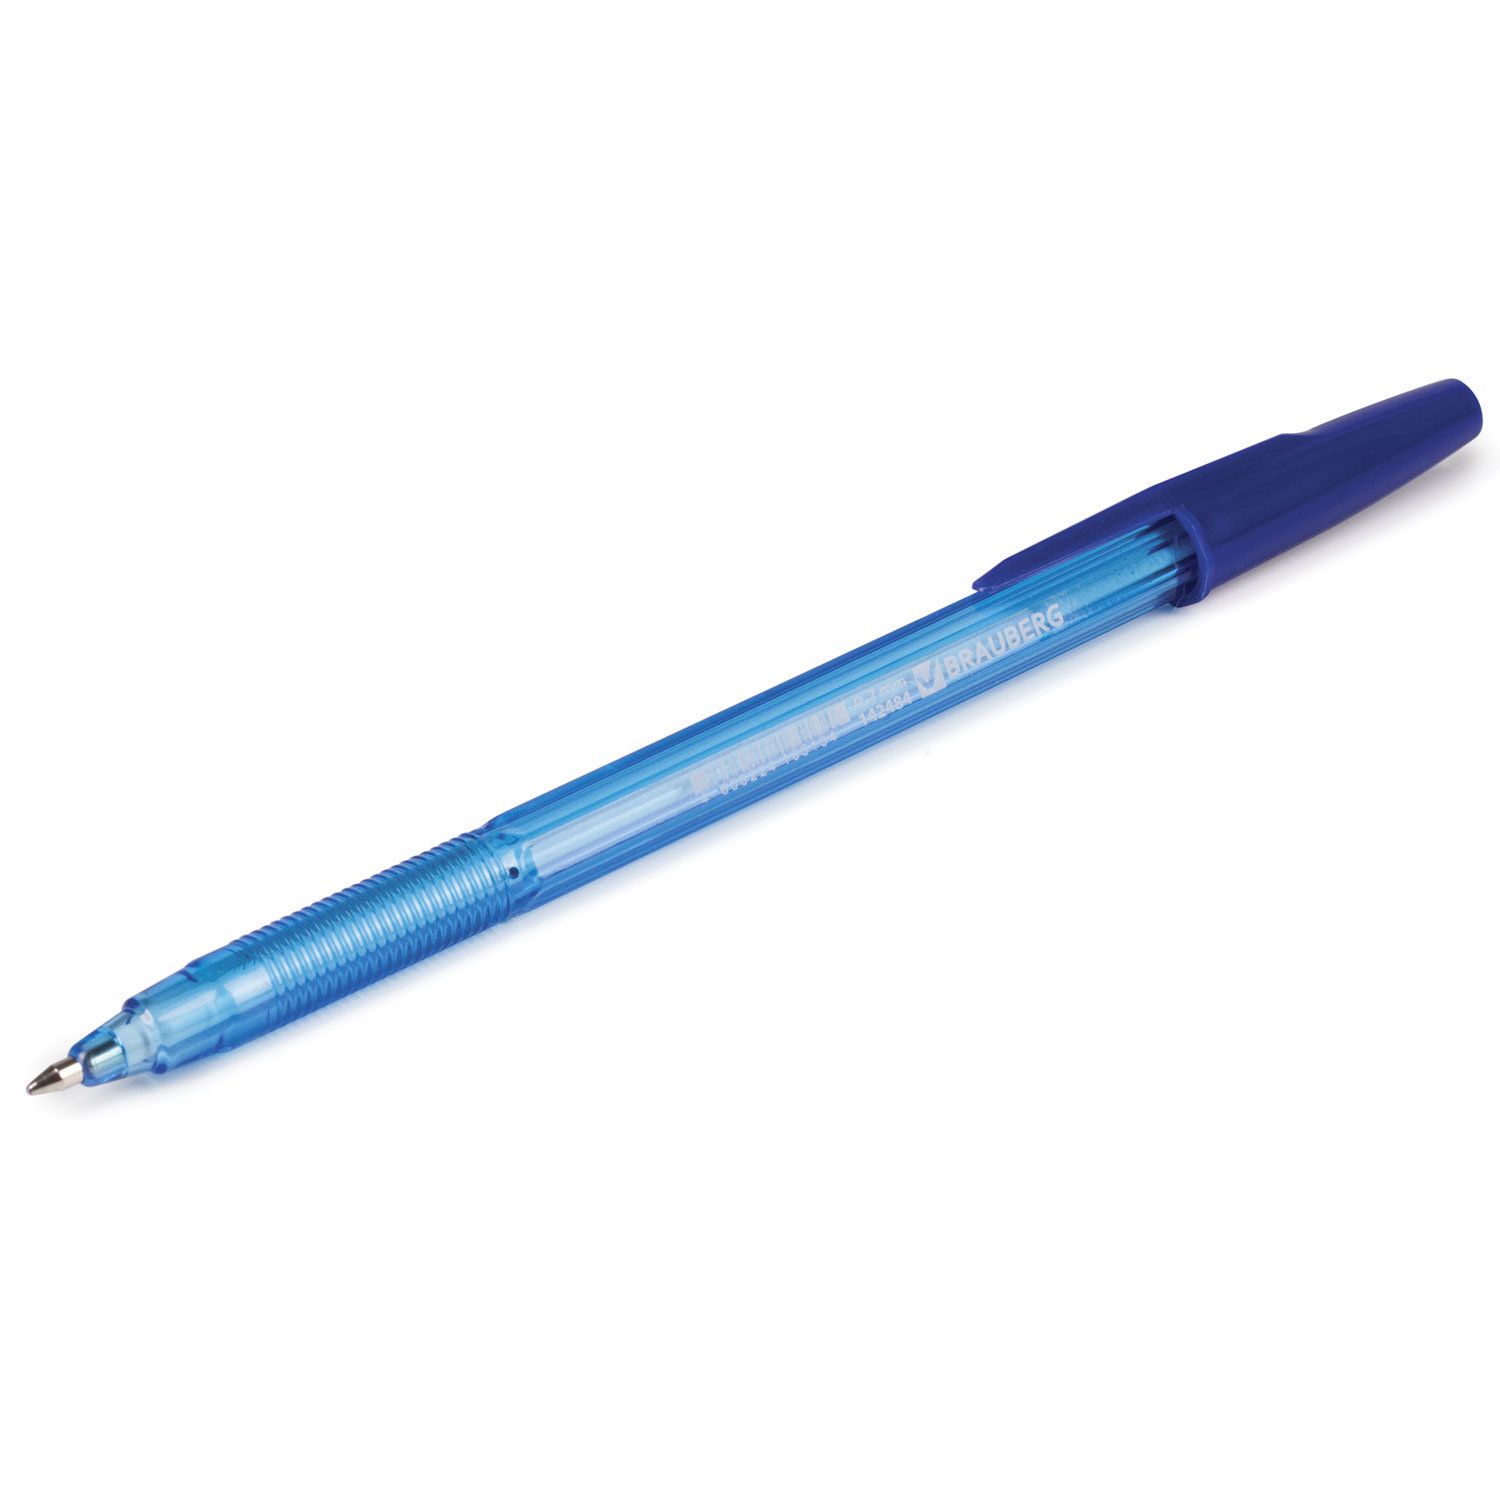 Brauberg 0.7. Ручка синяя BRAUBERG 0.7. Ручка БРАУБЕРГ 0.7 масляная. Ручка BRAUBERG 0.7 мм масляная. Ручка БРАУБЕРГ масляная.